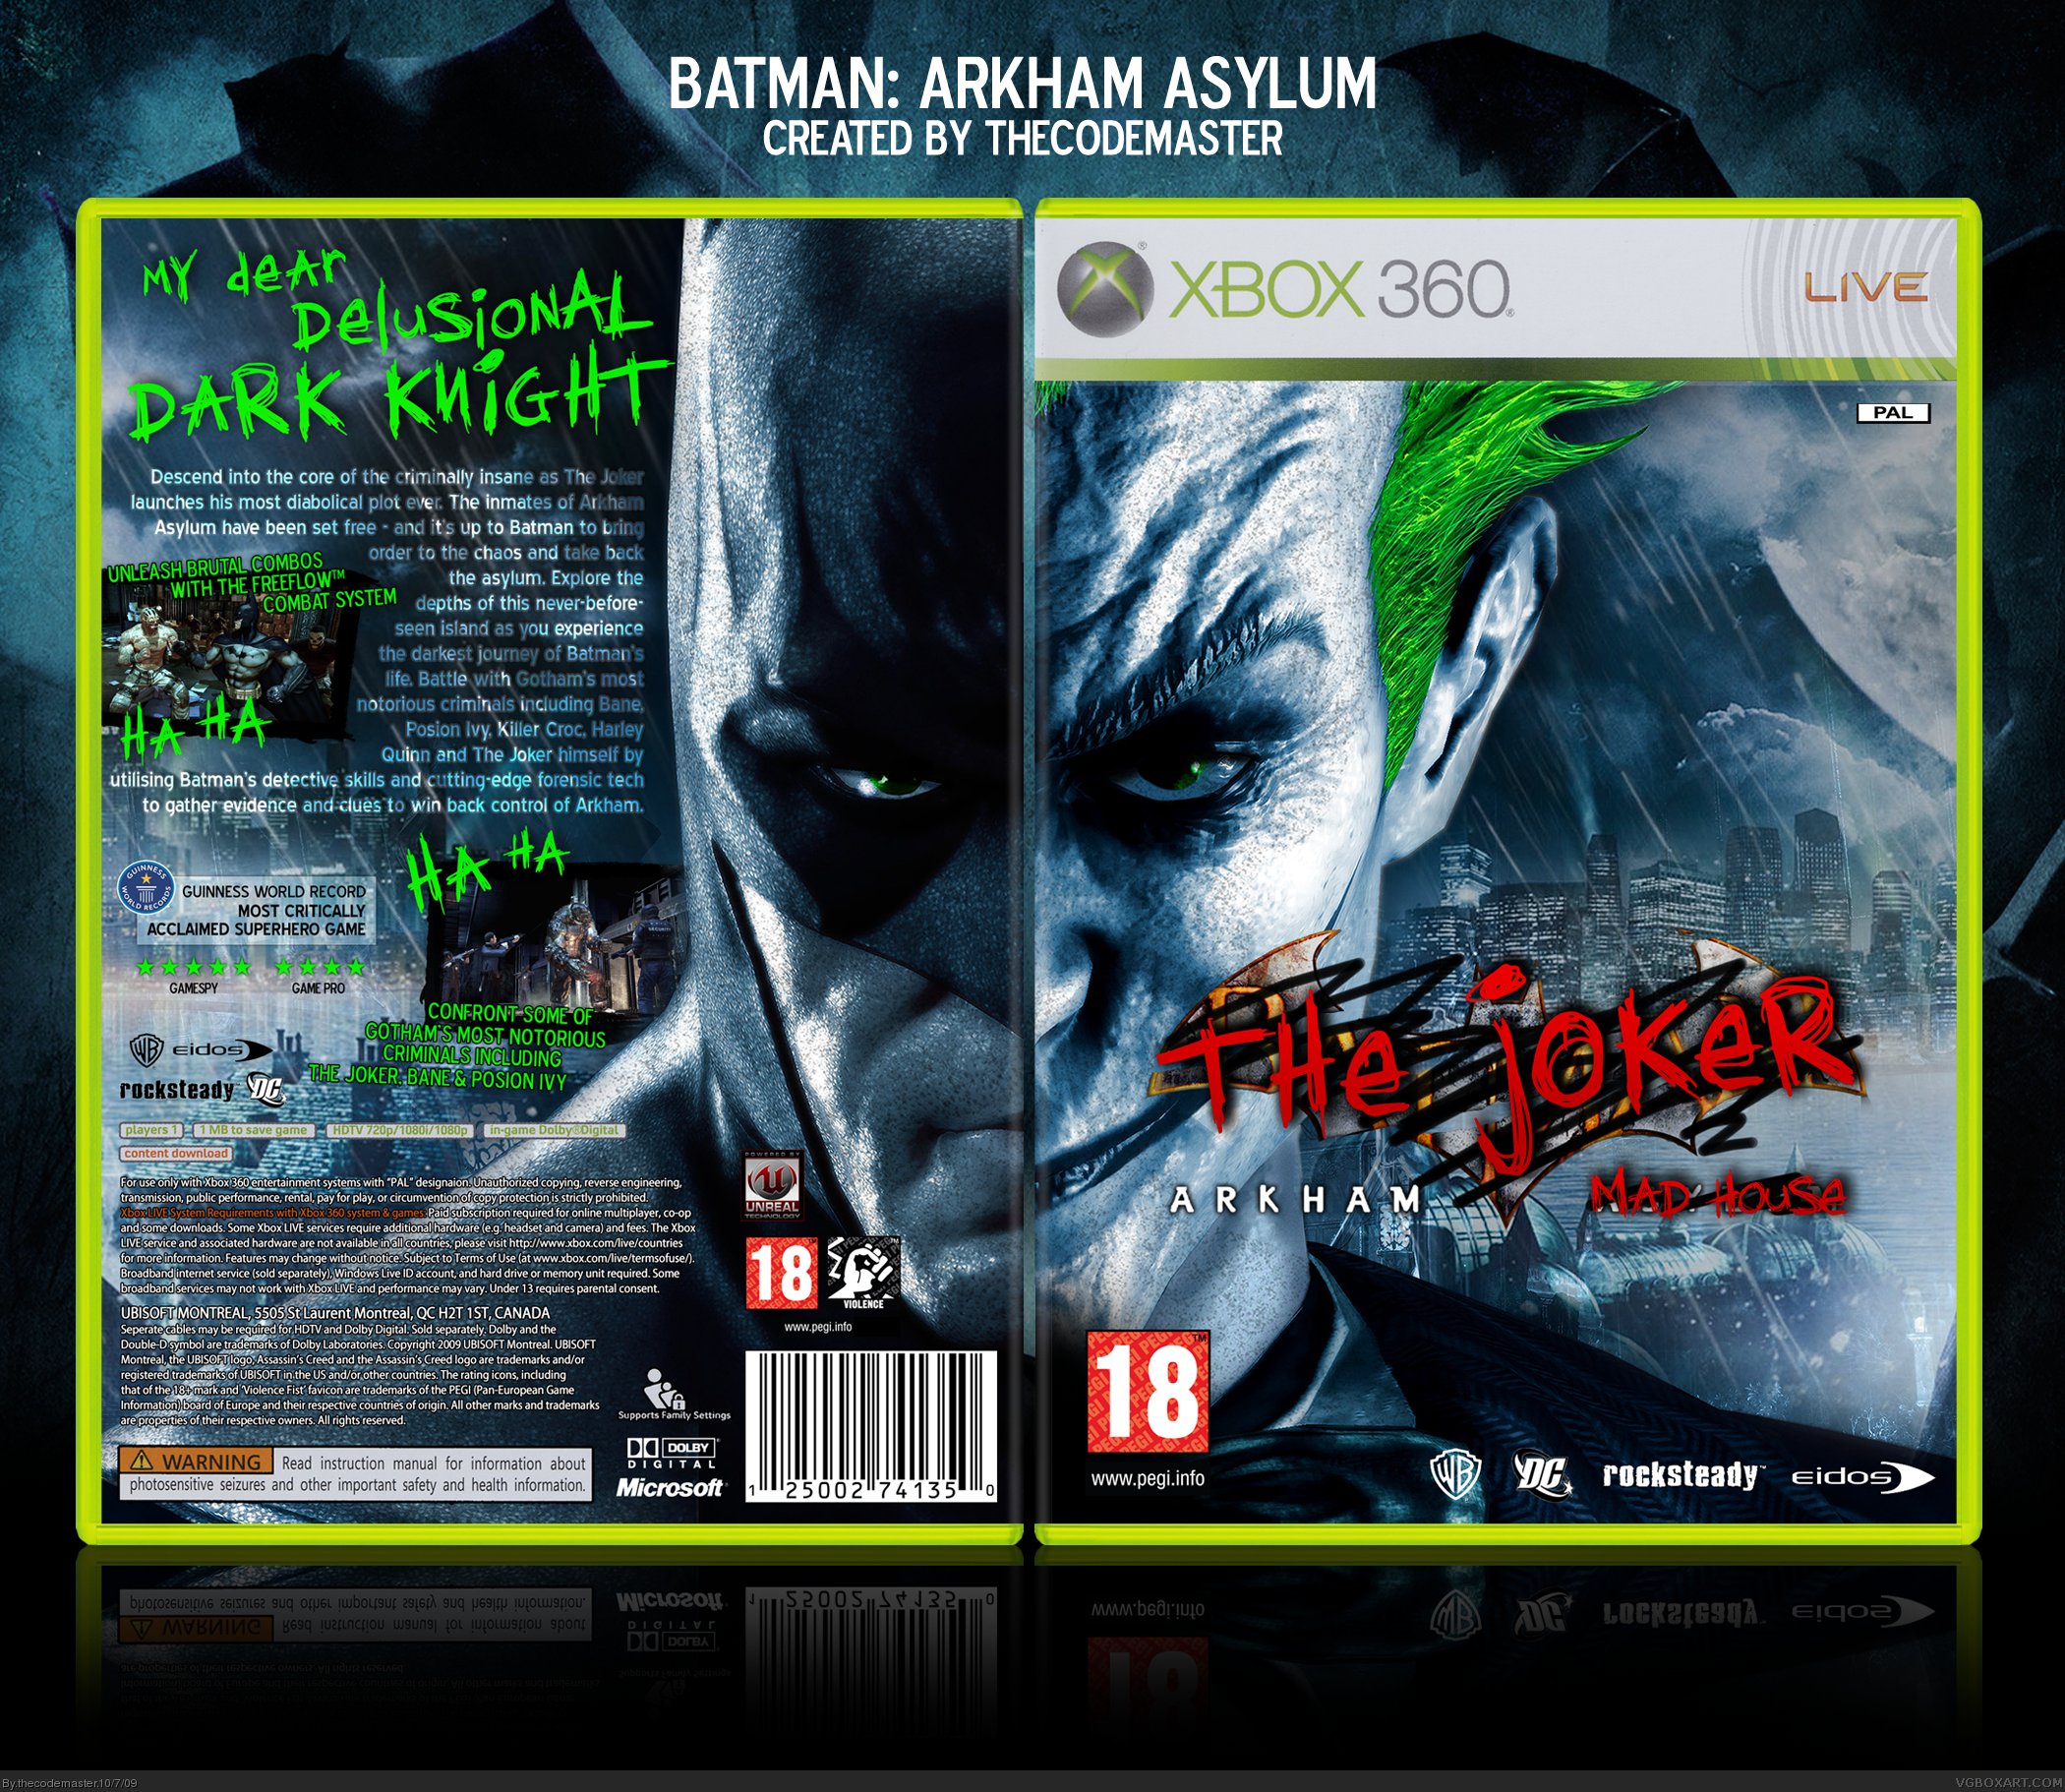 Batman: Arkham Asylum Xbox 360 Box Art Cover by thecodemaster